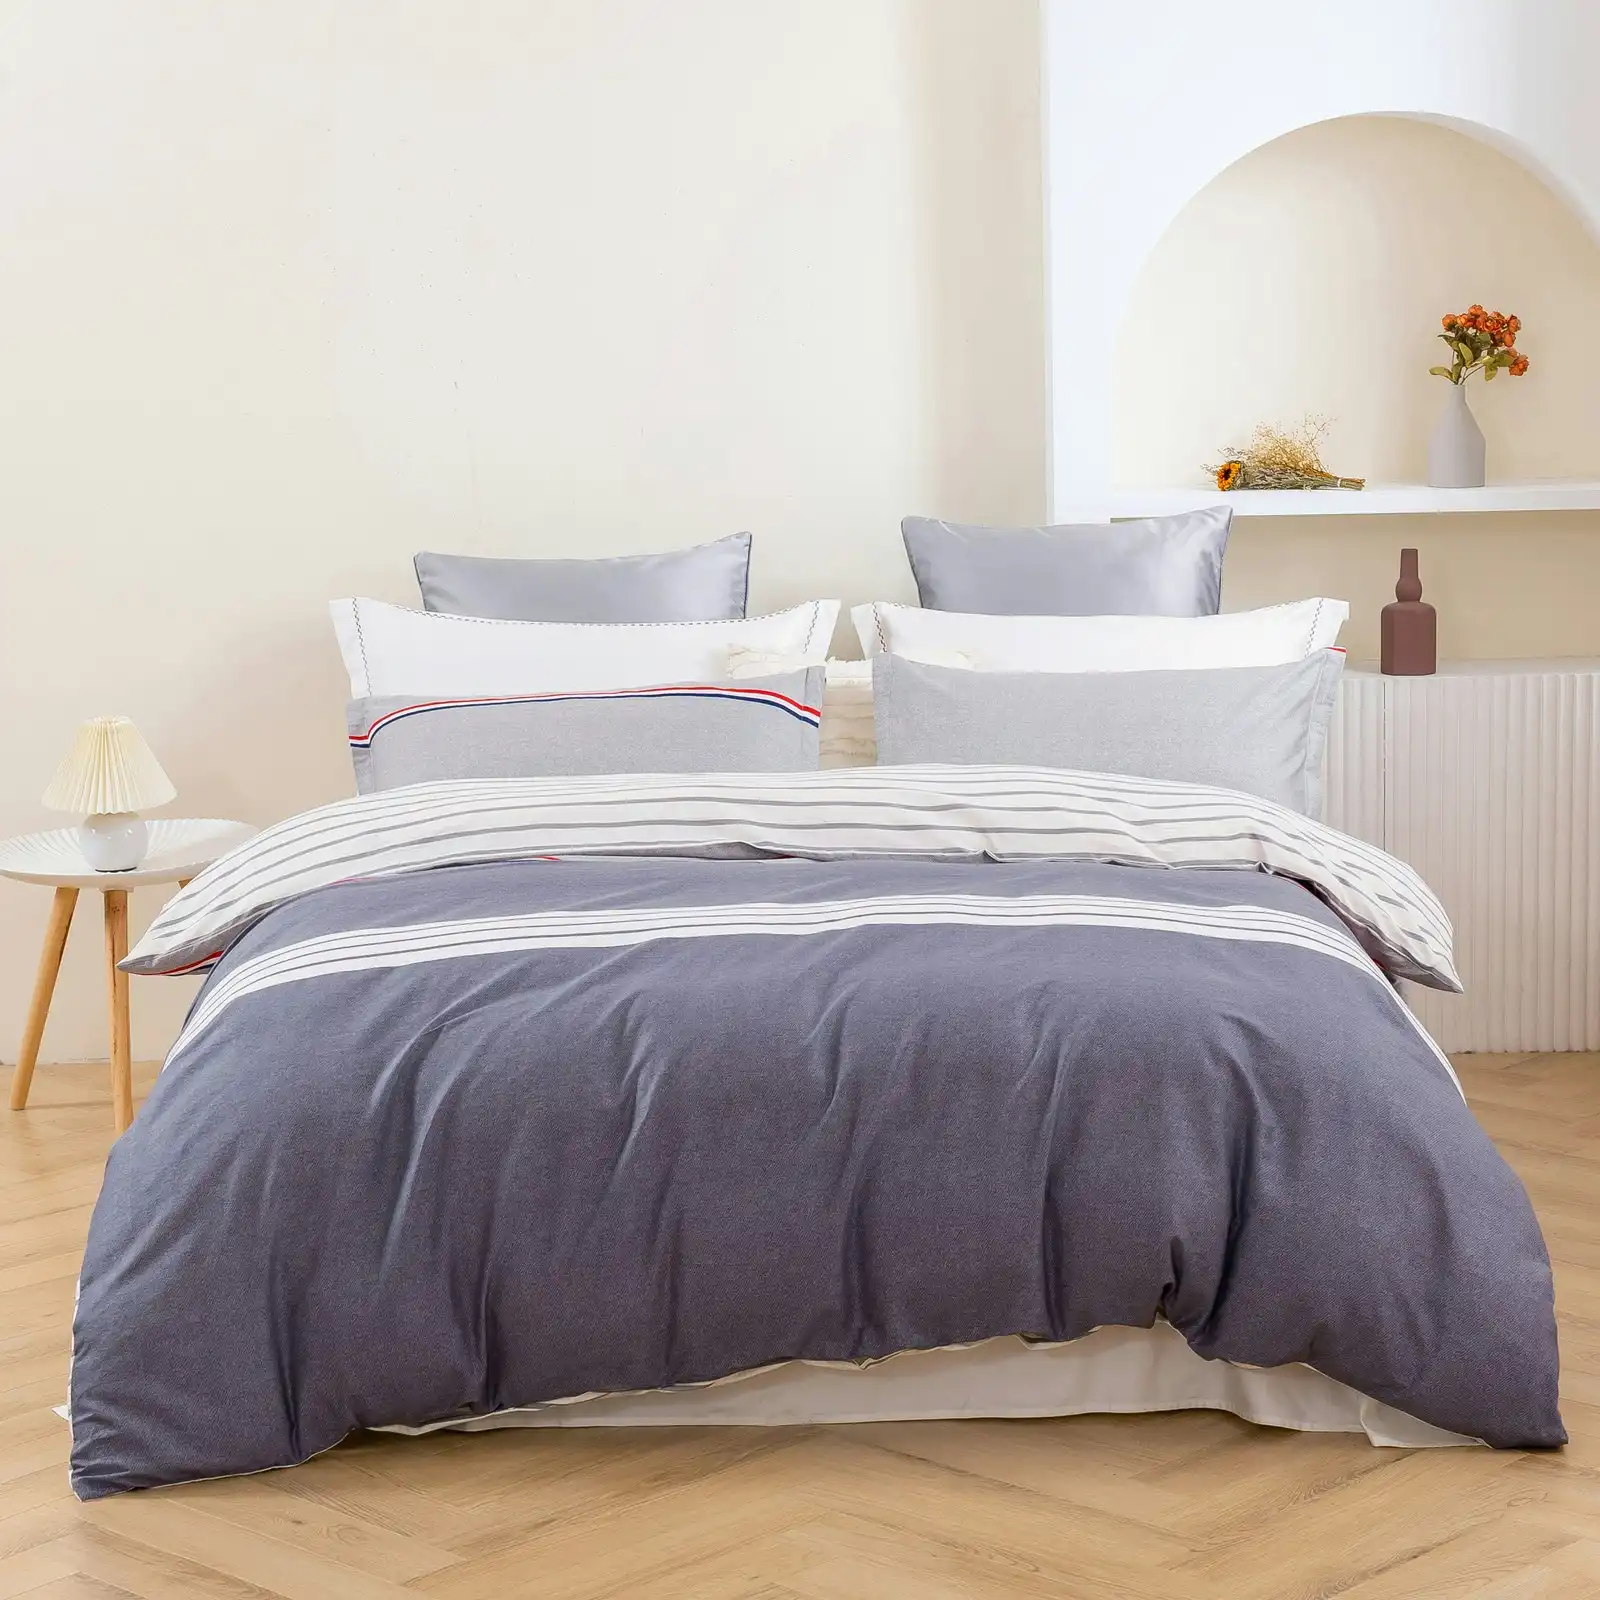 Dreamaker Tommy 100% Cotton Reversible Quilt Cover Set Single Bed